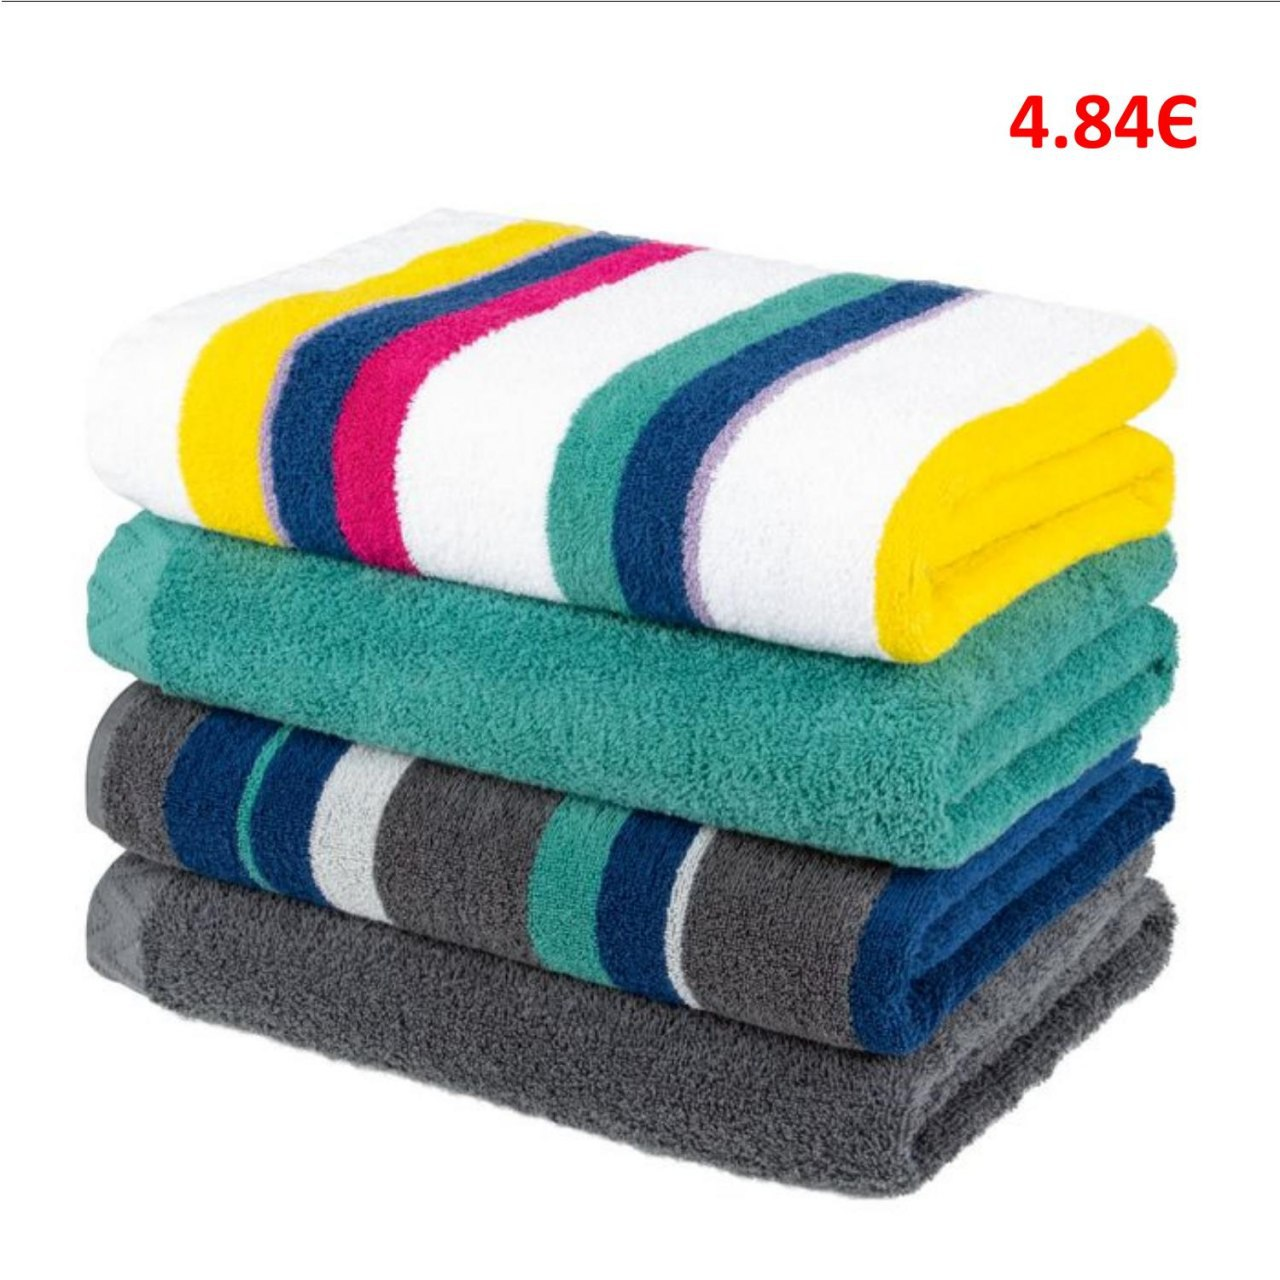 Немецкие полотенца. Германские полотенца. Германские полотенца цветные. Duschtuch полотенце. Немецкие полотенца 100х160.